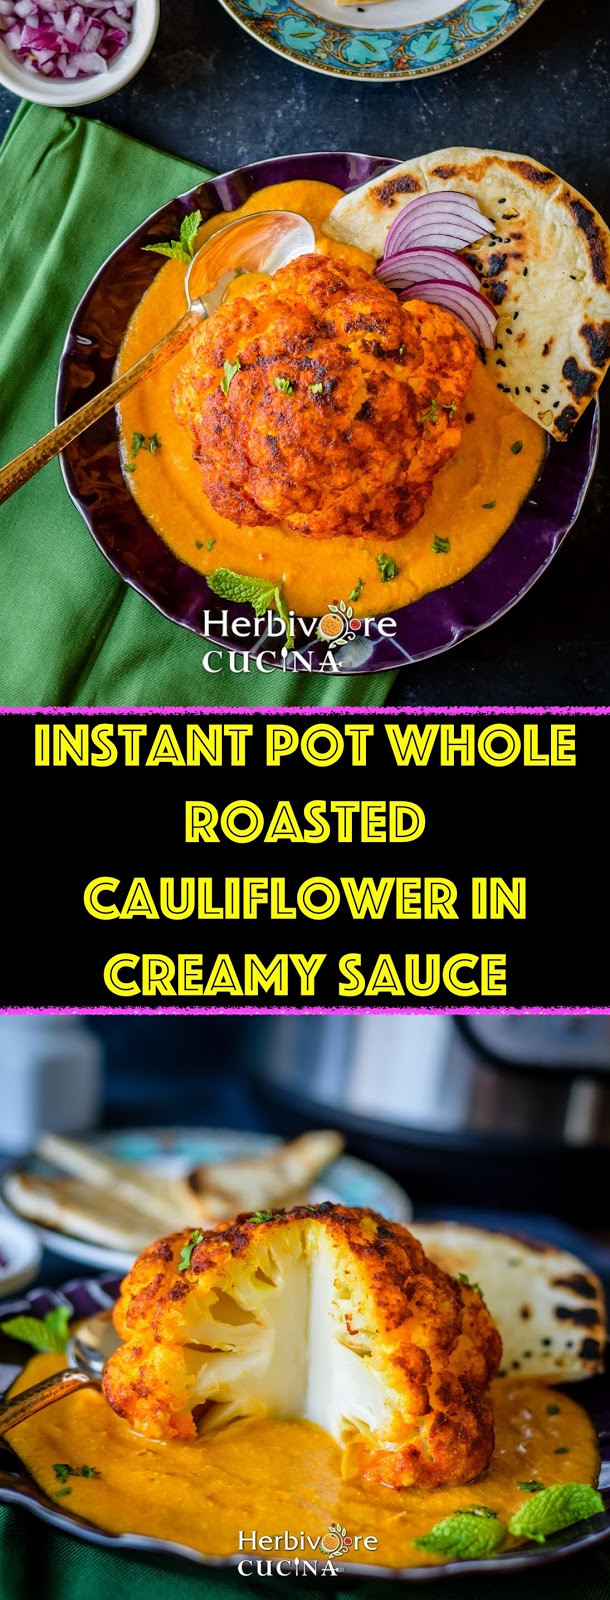 Instant Pot Whole Cauliflower
 Herbivore Cucina Instant Pot Whole Roasted Cauliflower in